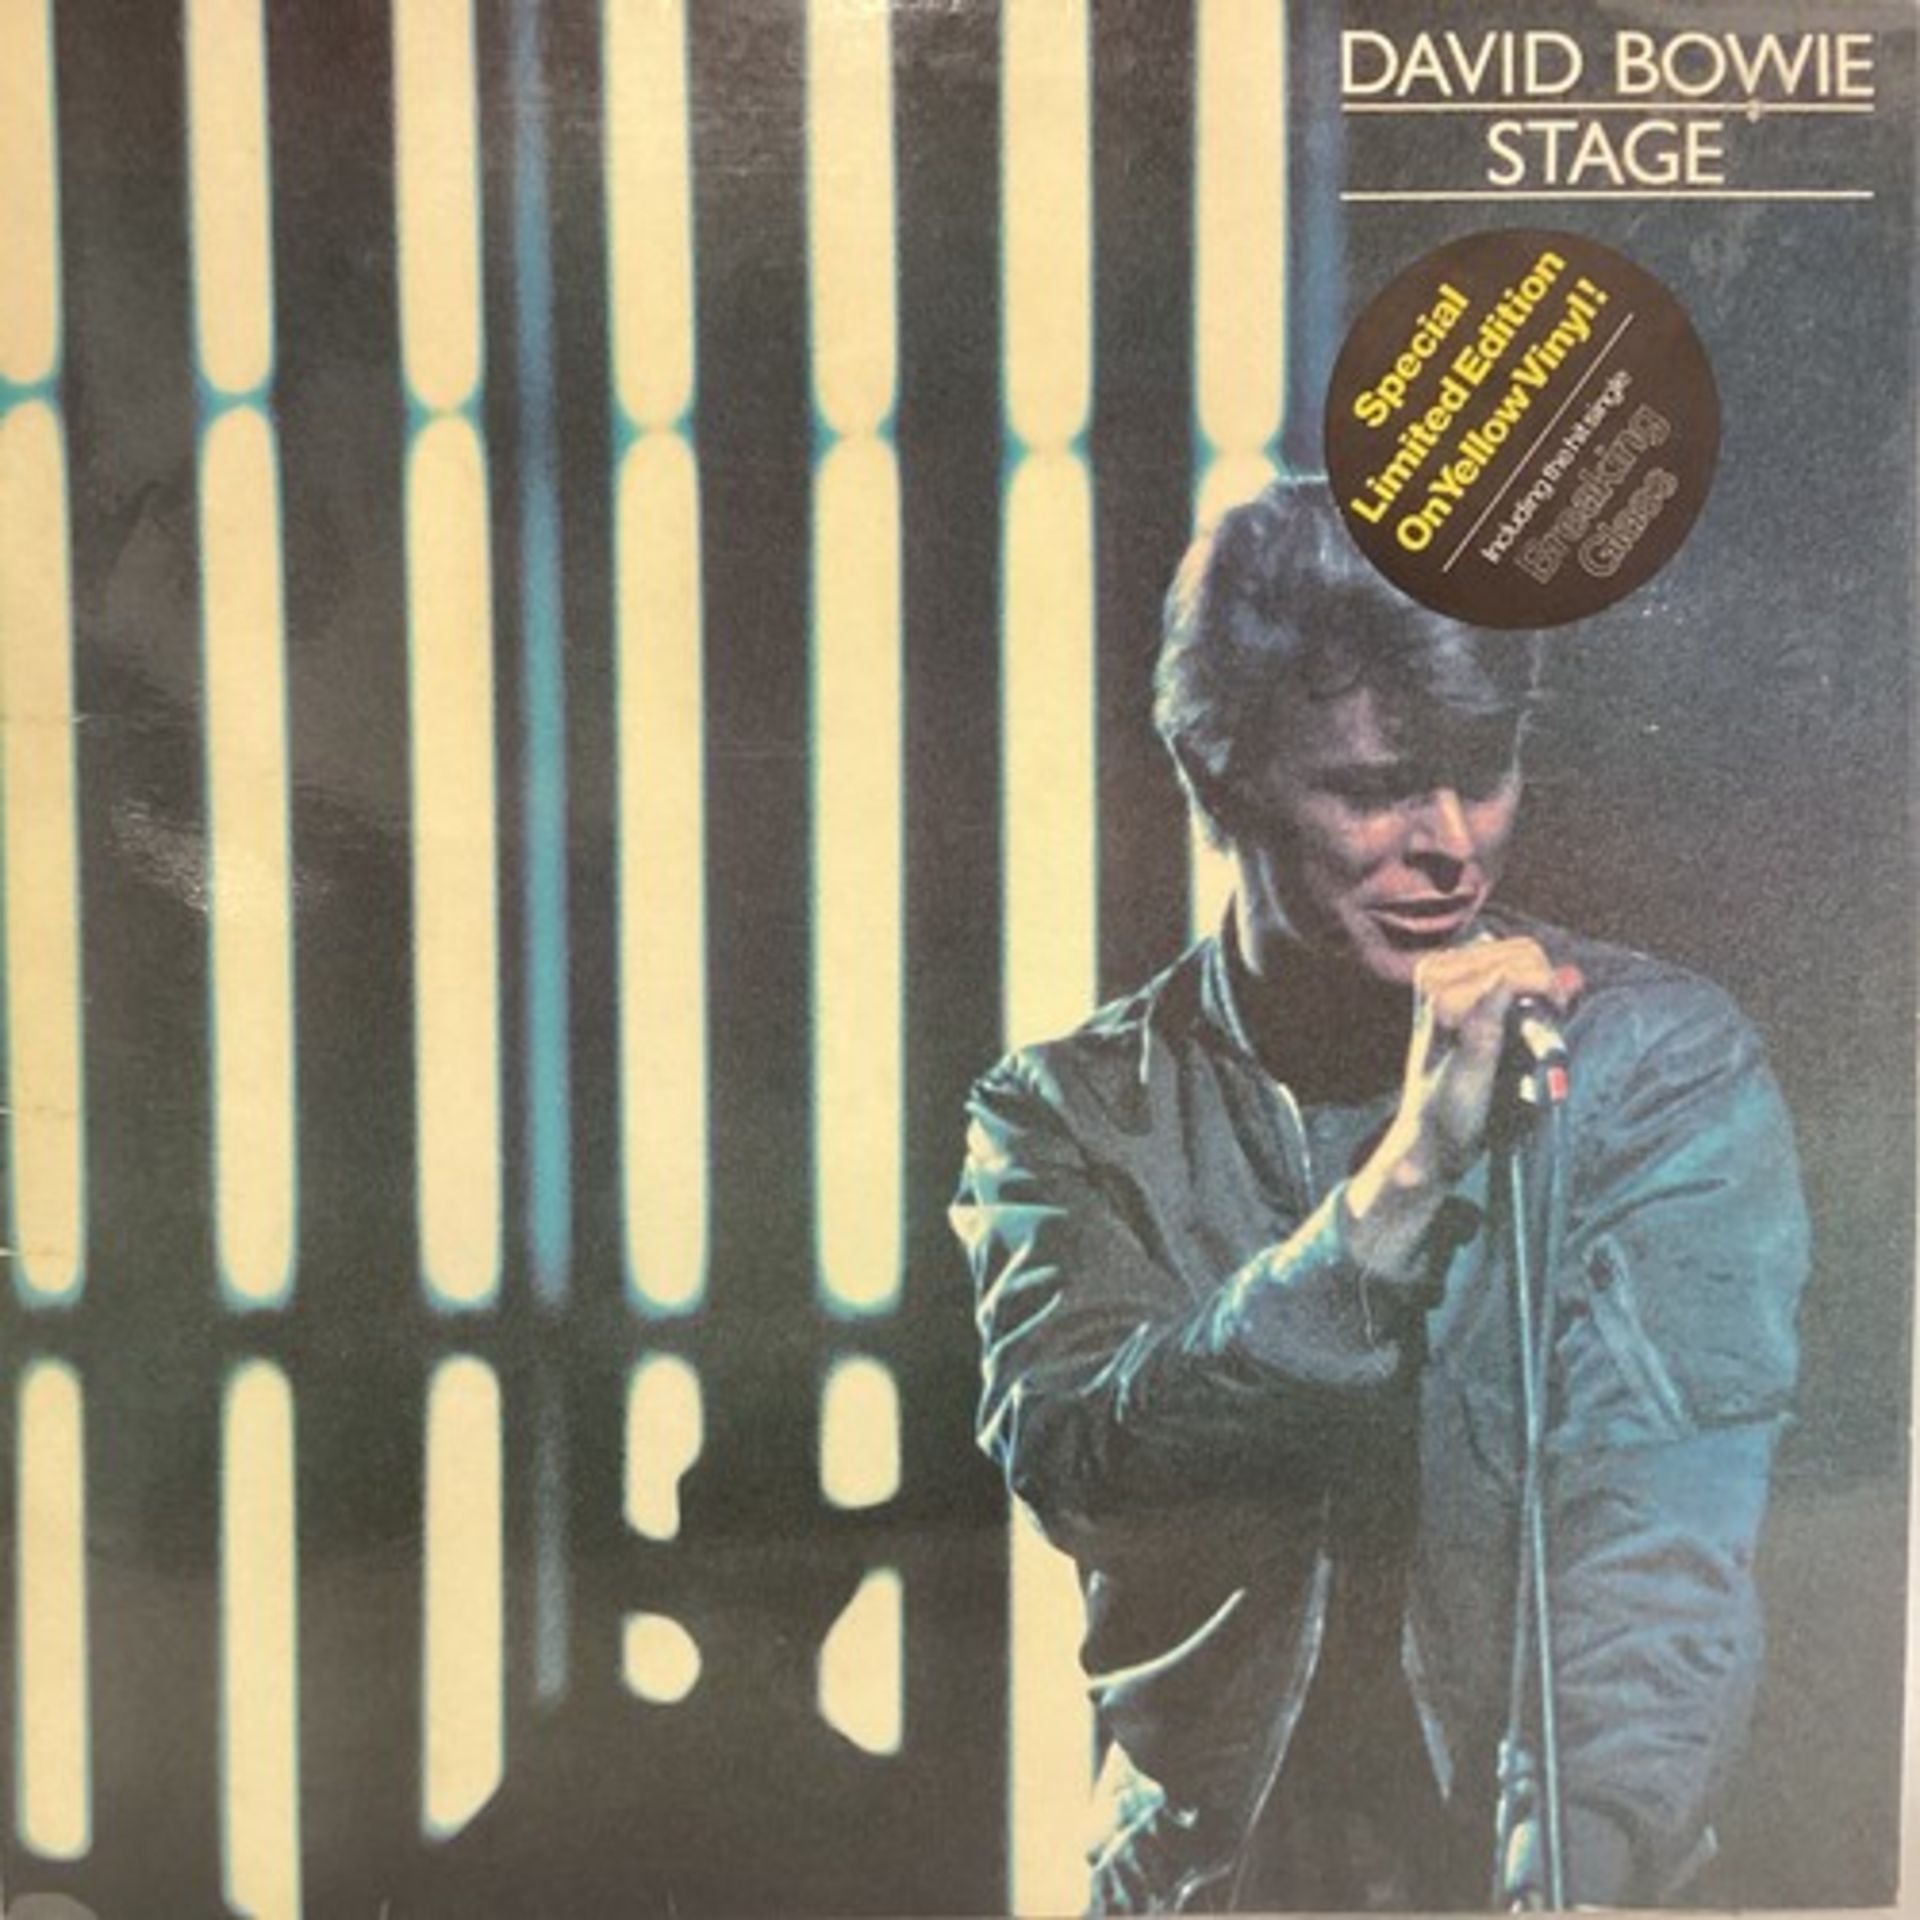 DAVID BOWIE DOUBLE ALBUM ‘STAGE’ ON YELLOW VINYL PRESSING.